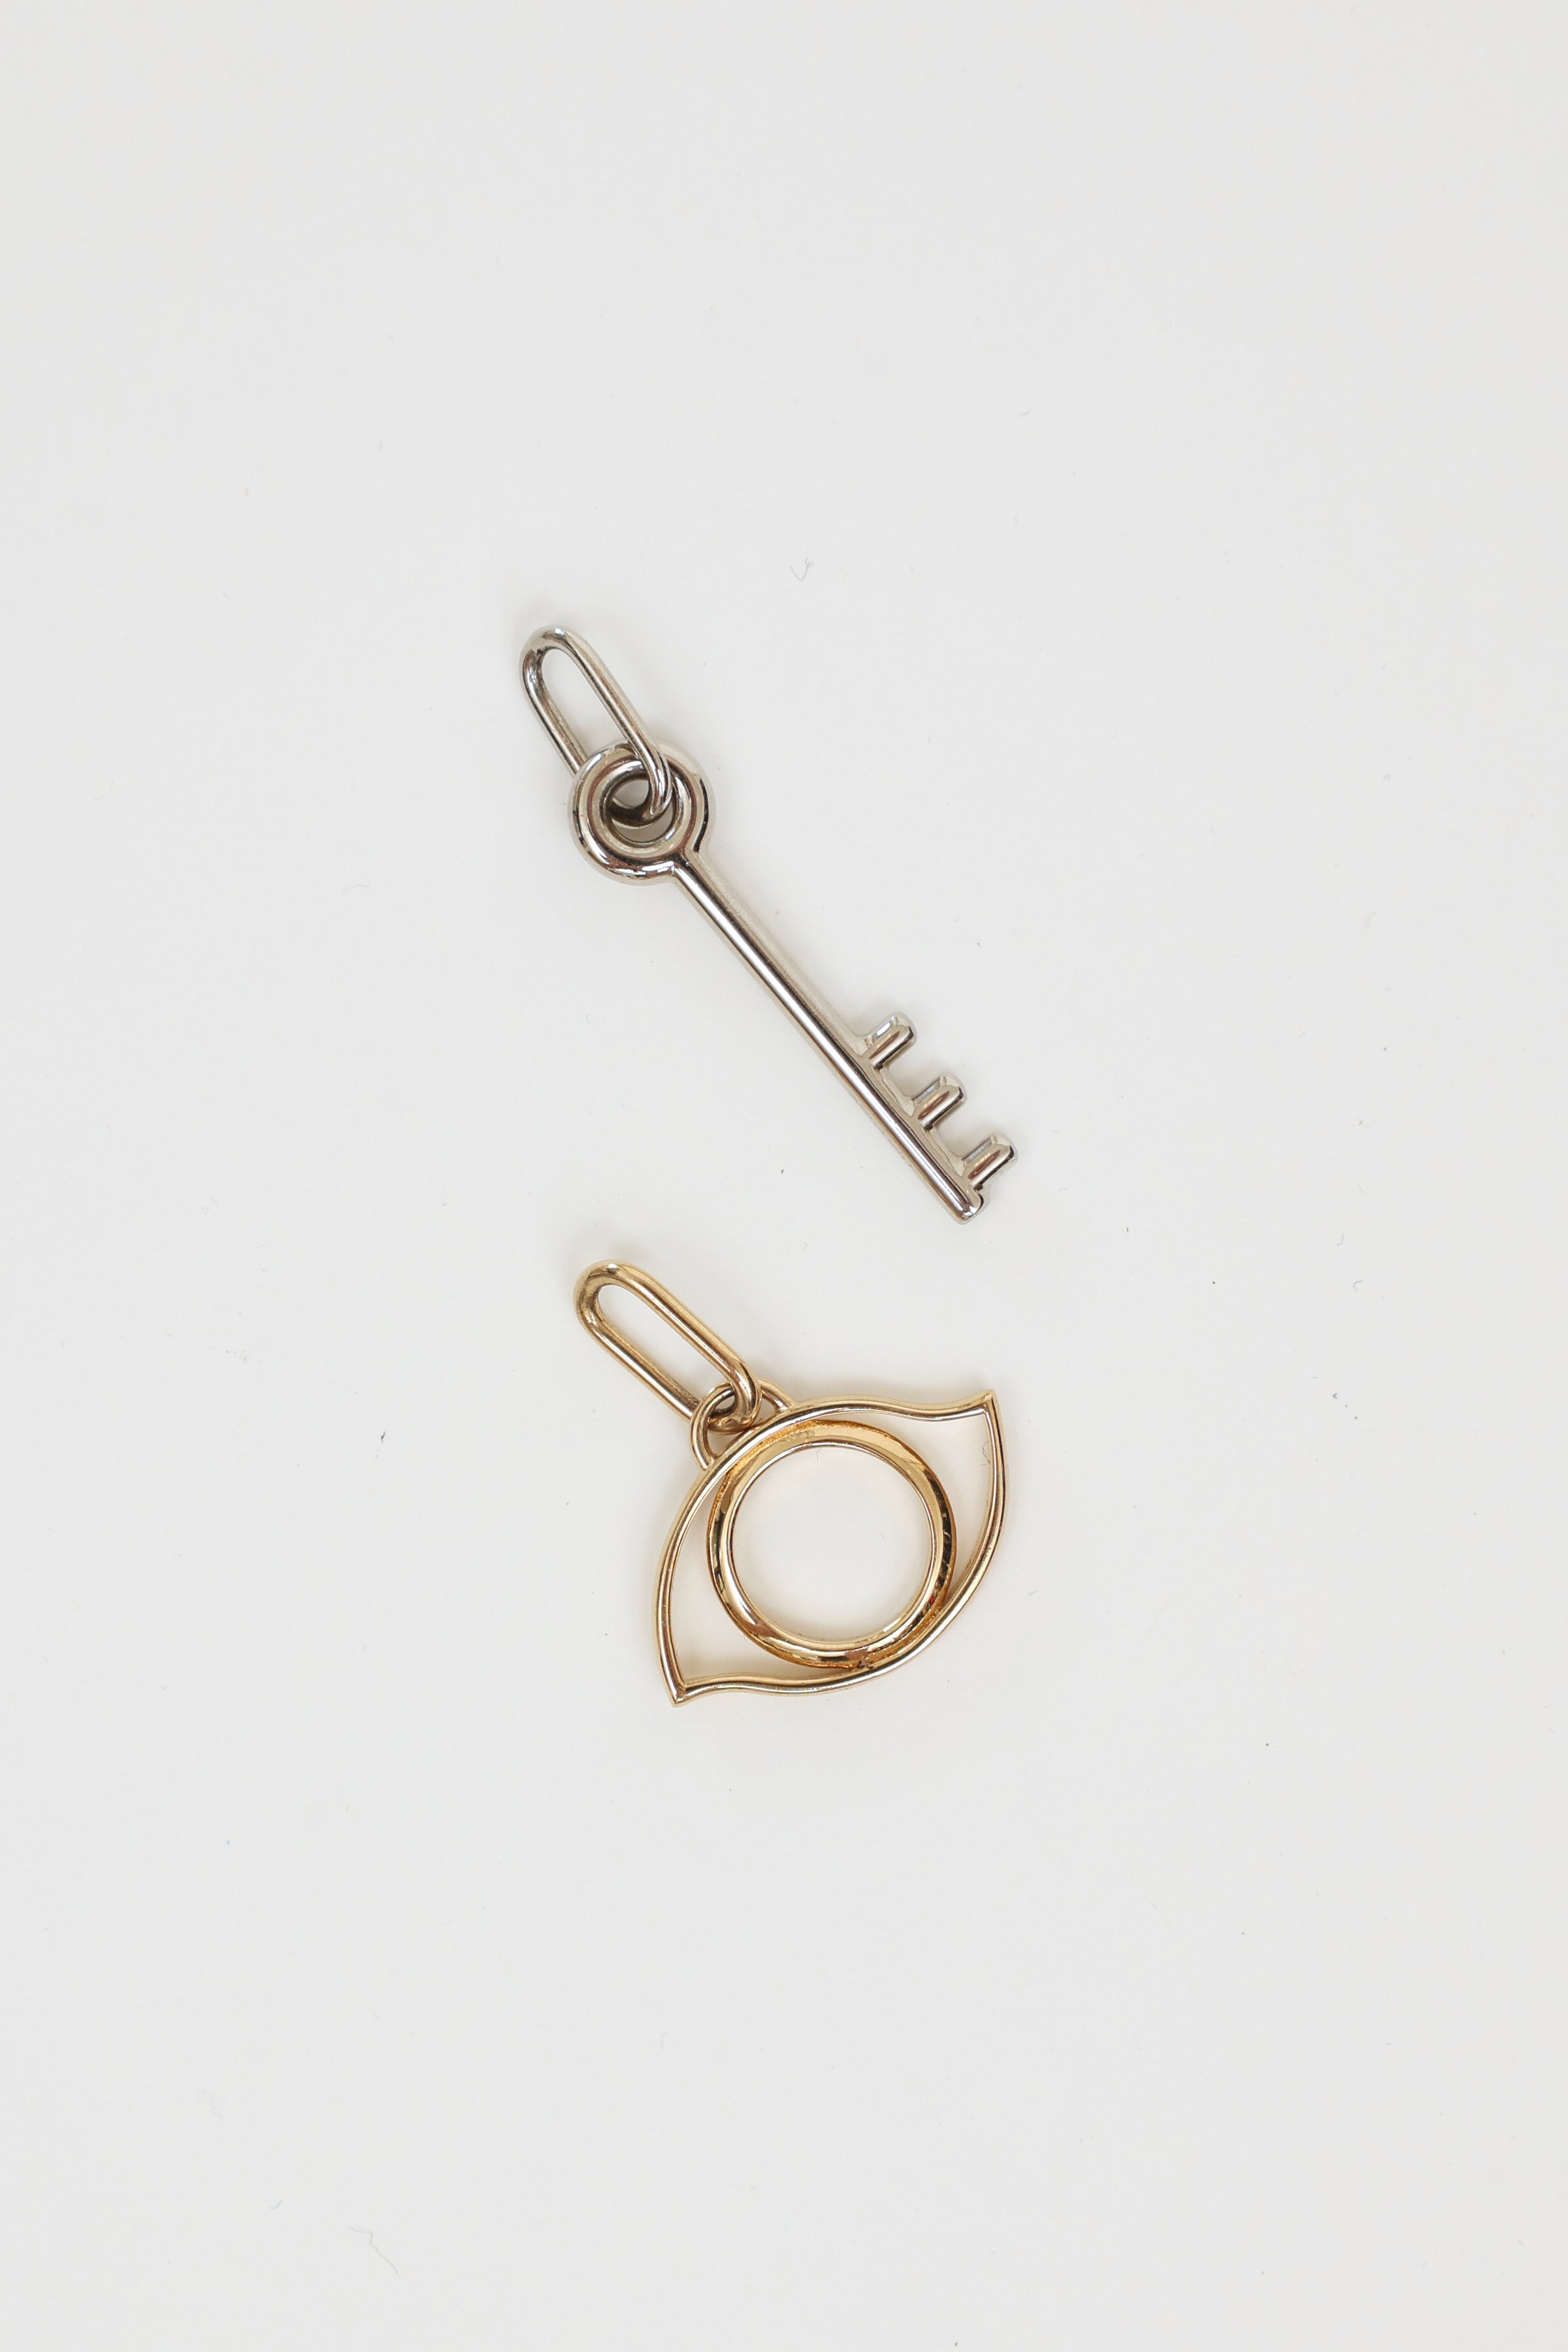 HERMES Curiosite necklace pendant key